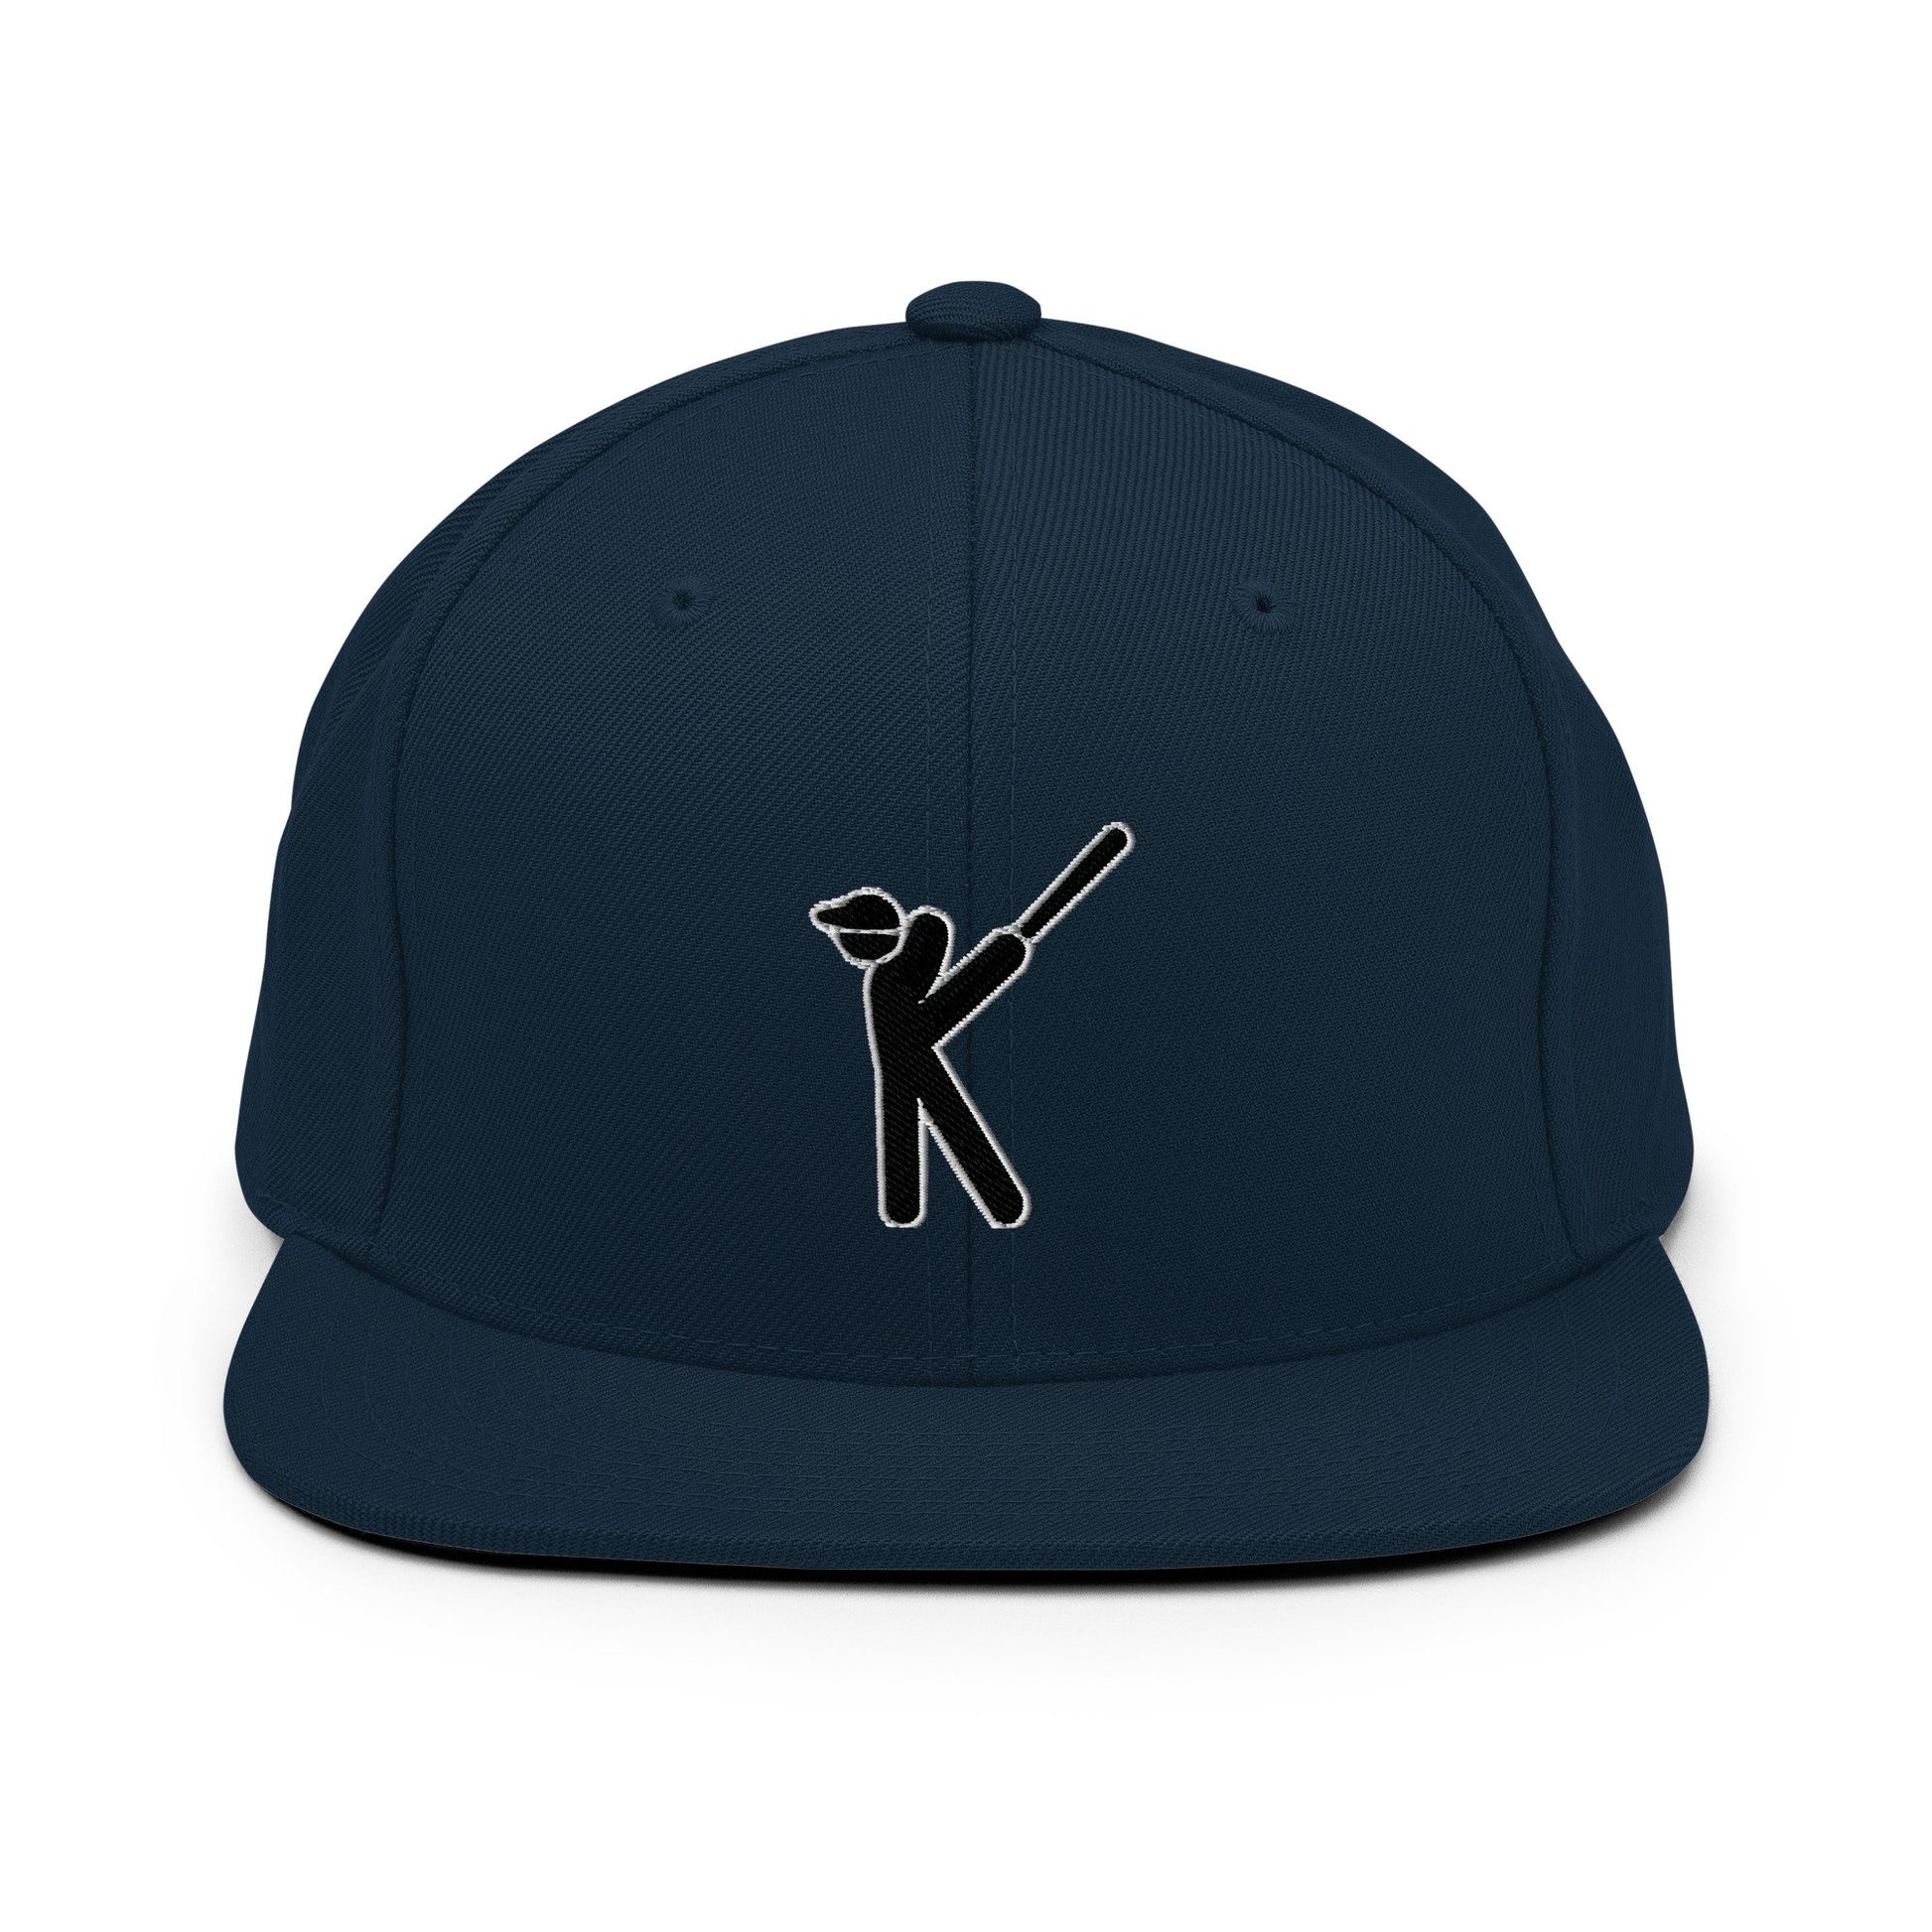 Kasabe ShowZone snapback hat in dark navy